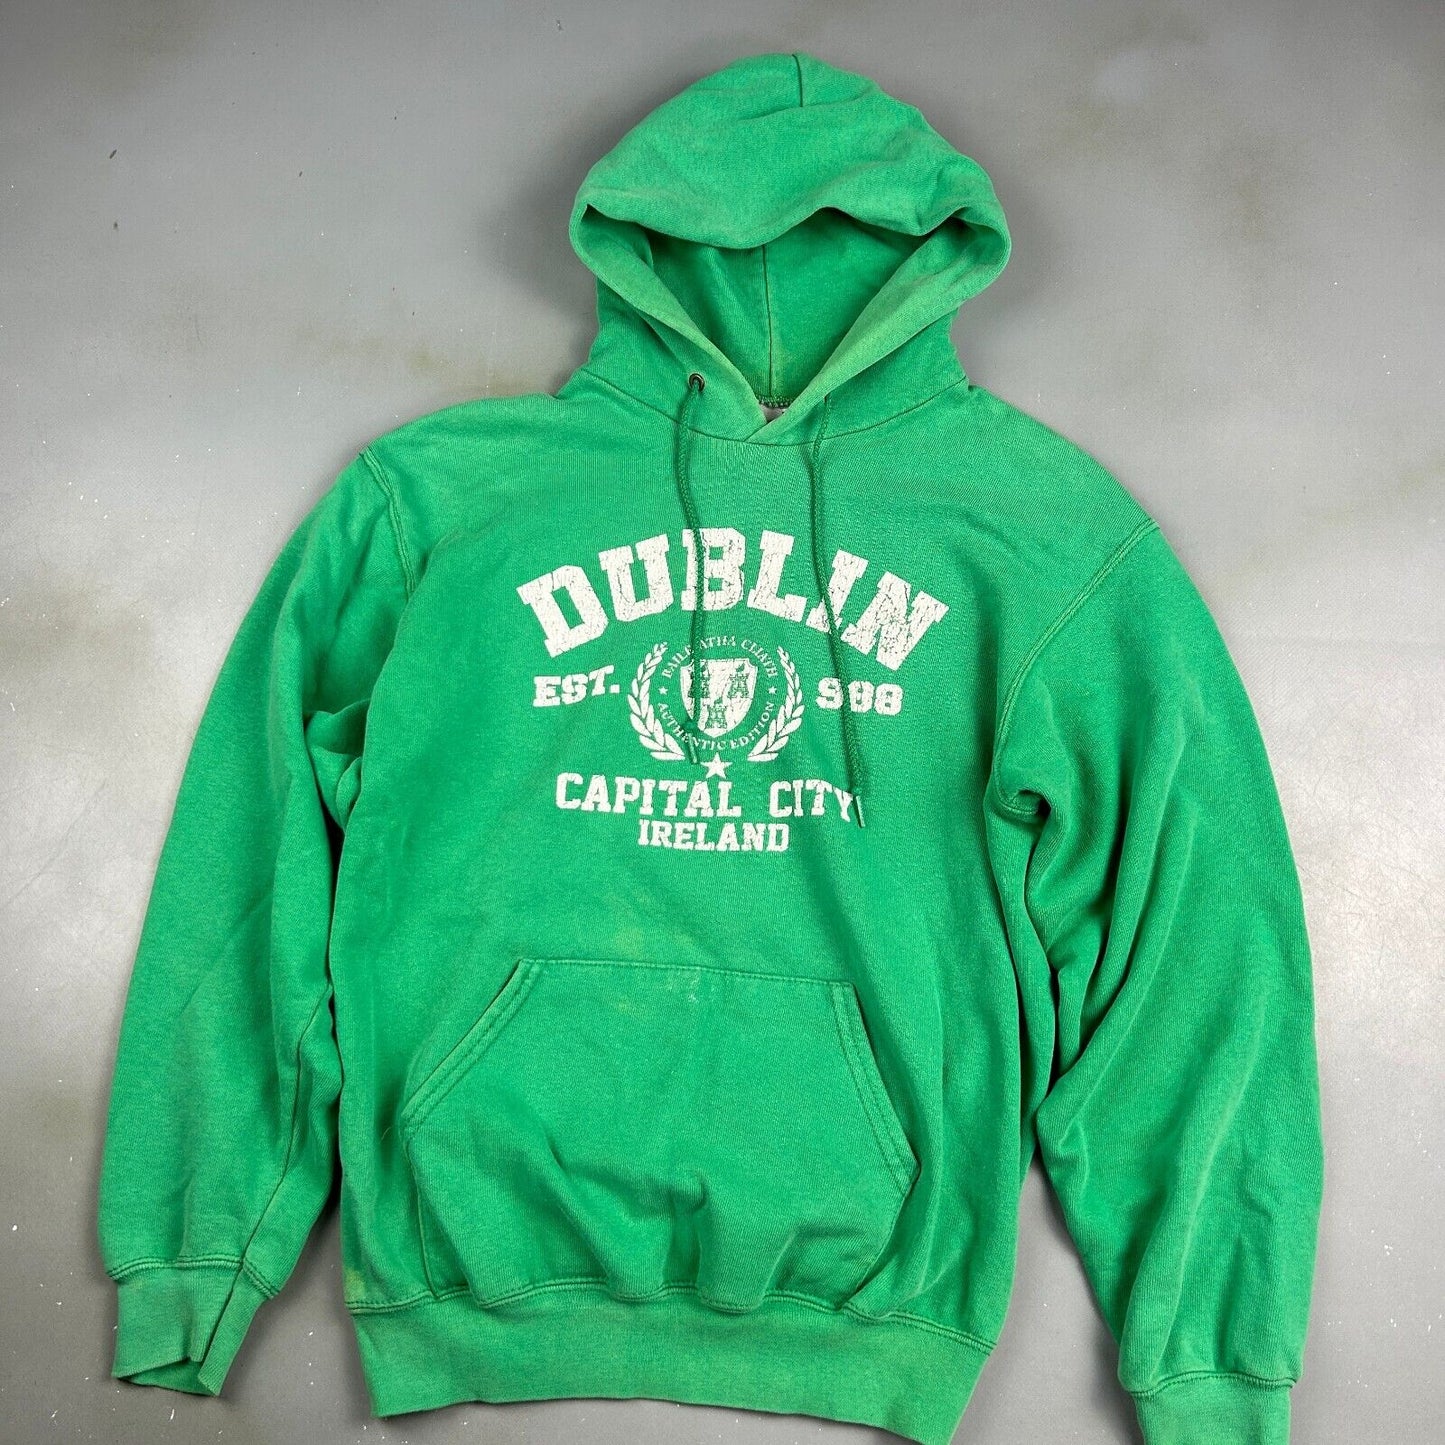 VINTAGE Dublin Ireland Green Hoodie Sweater sz Small Adult